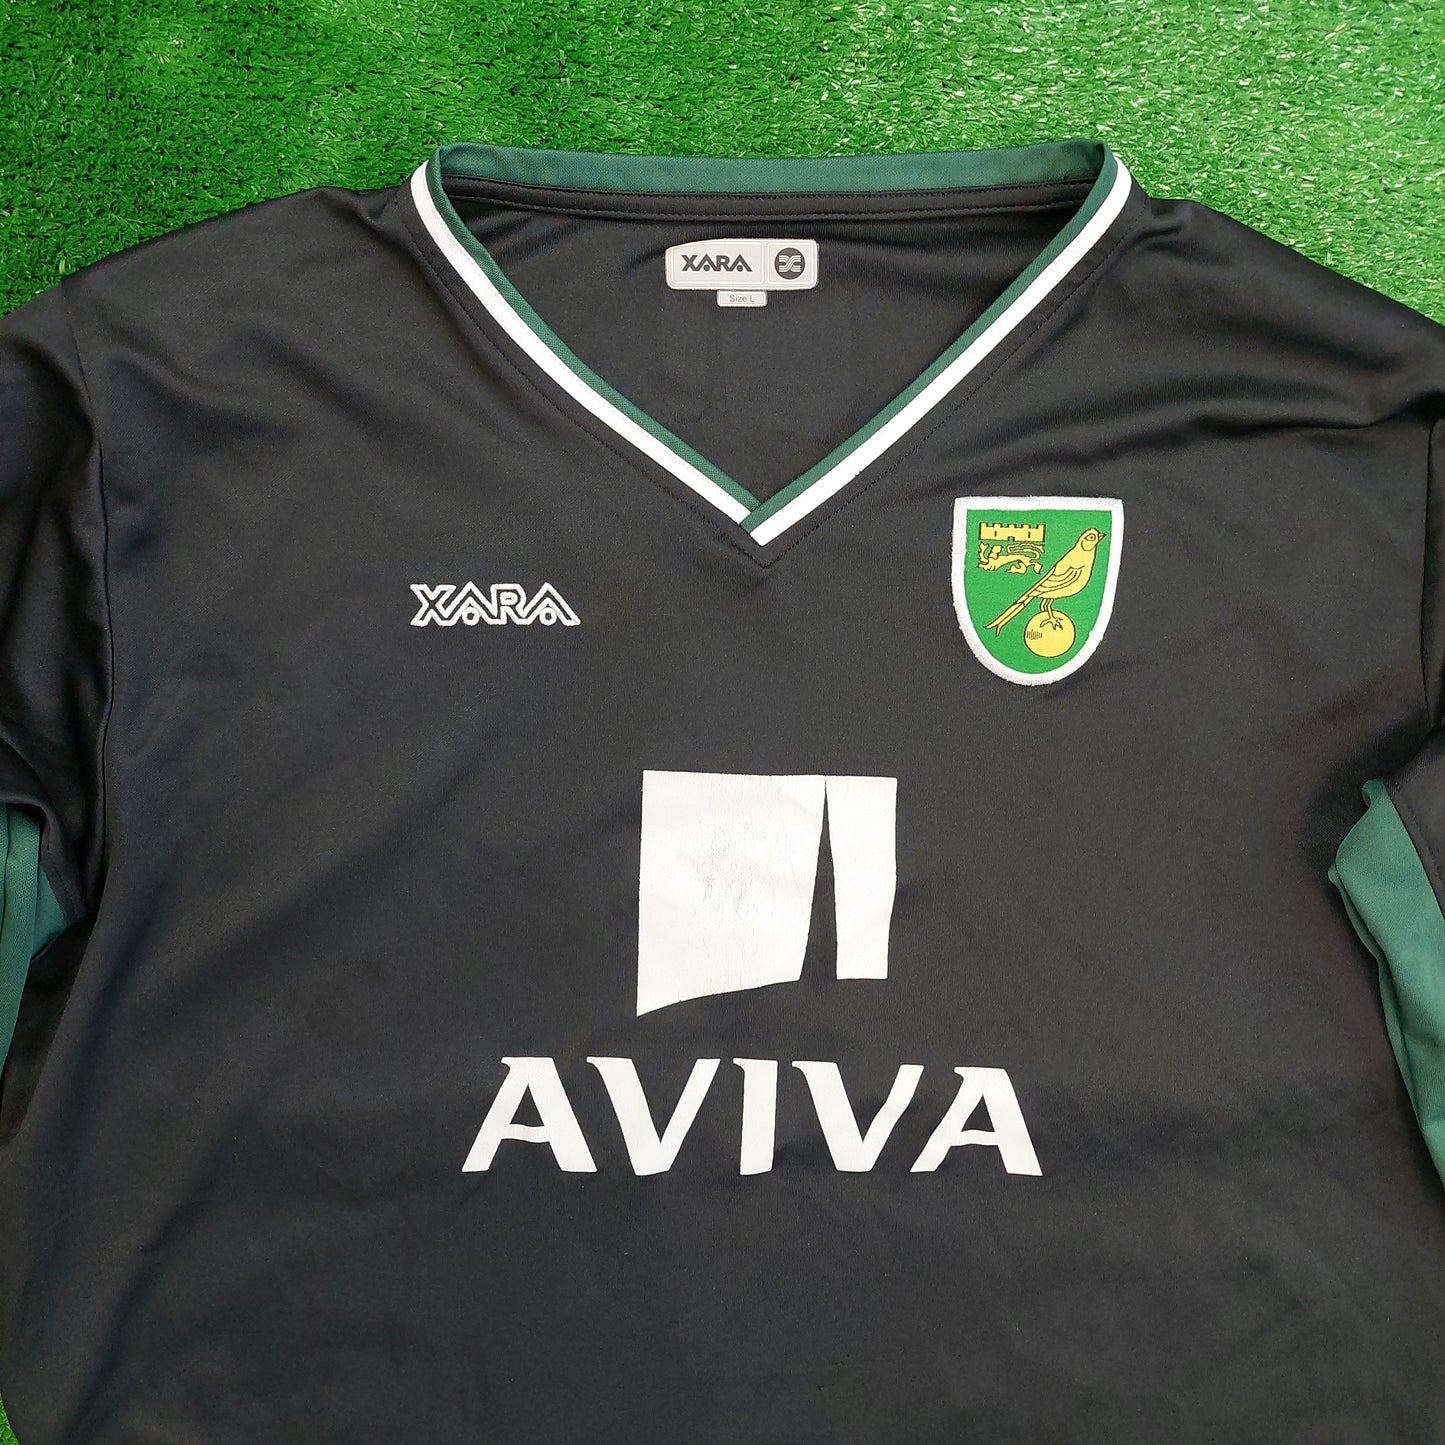 Norwich City 2008/09 L/S Away Shirt (Very Good) - Size L